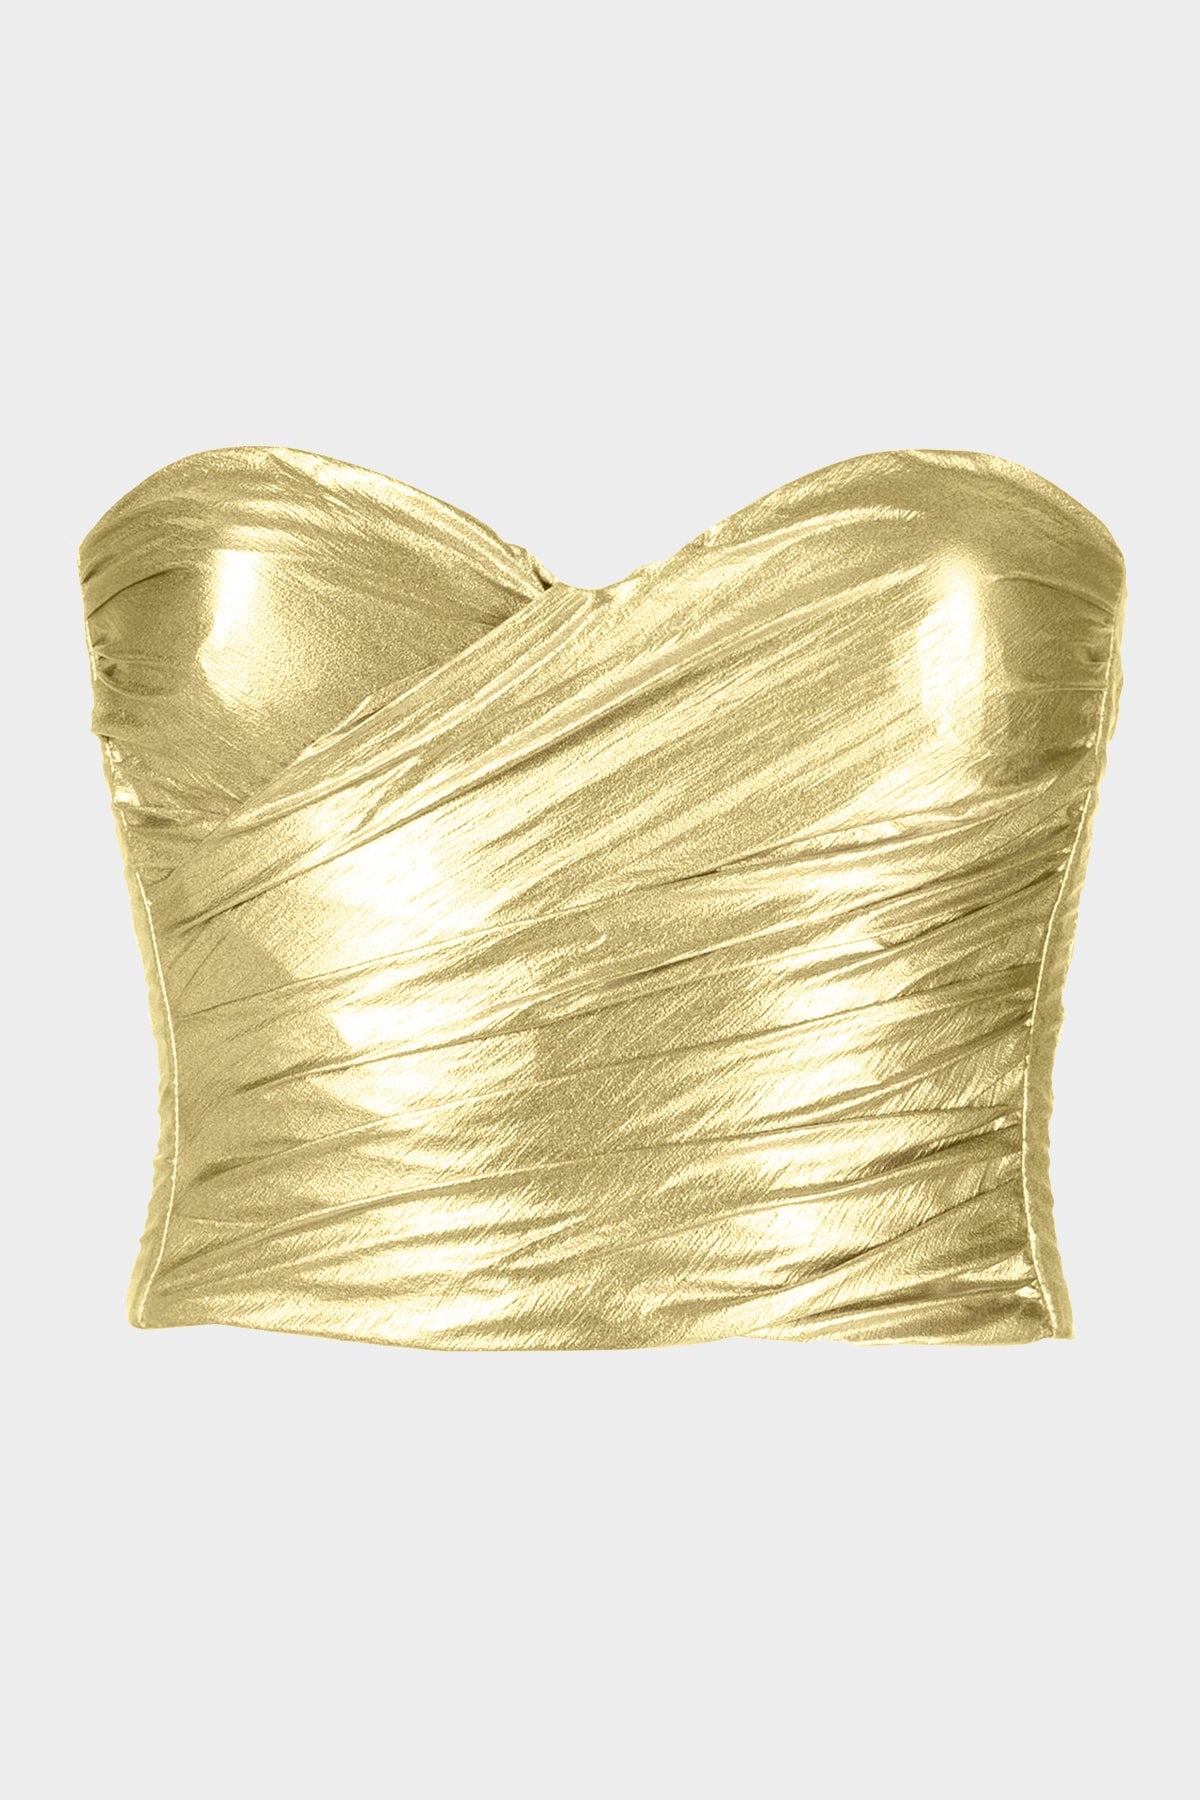 Lame Taffeta Couture Bustier in Gold - shop-olivia.com